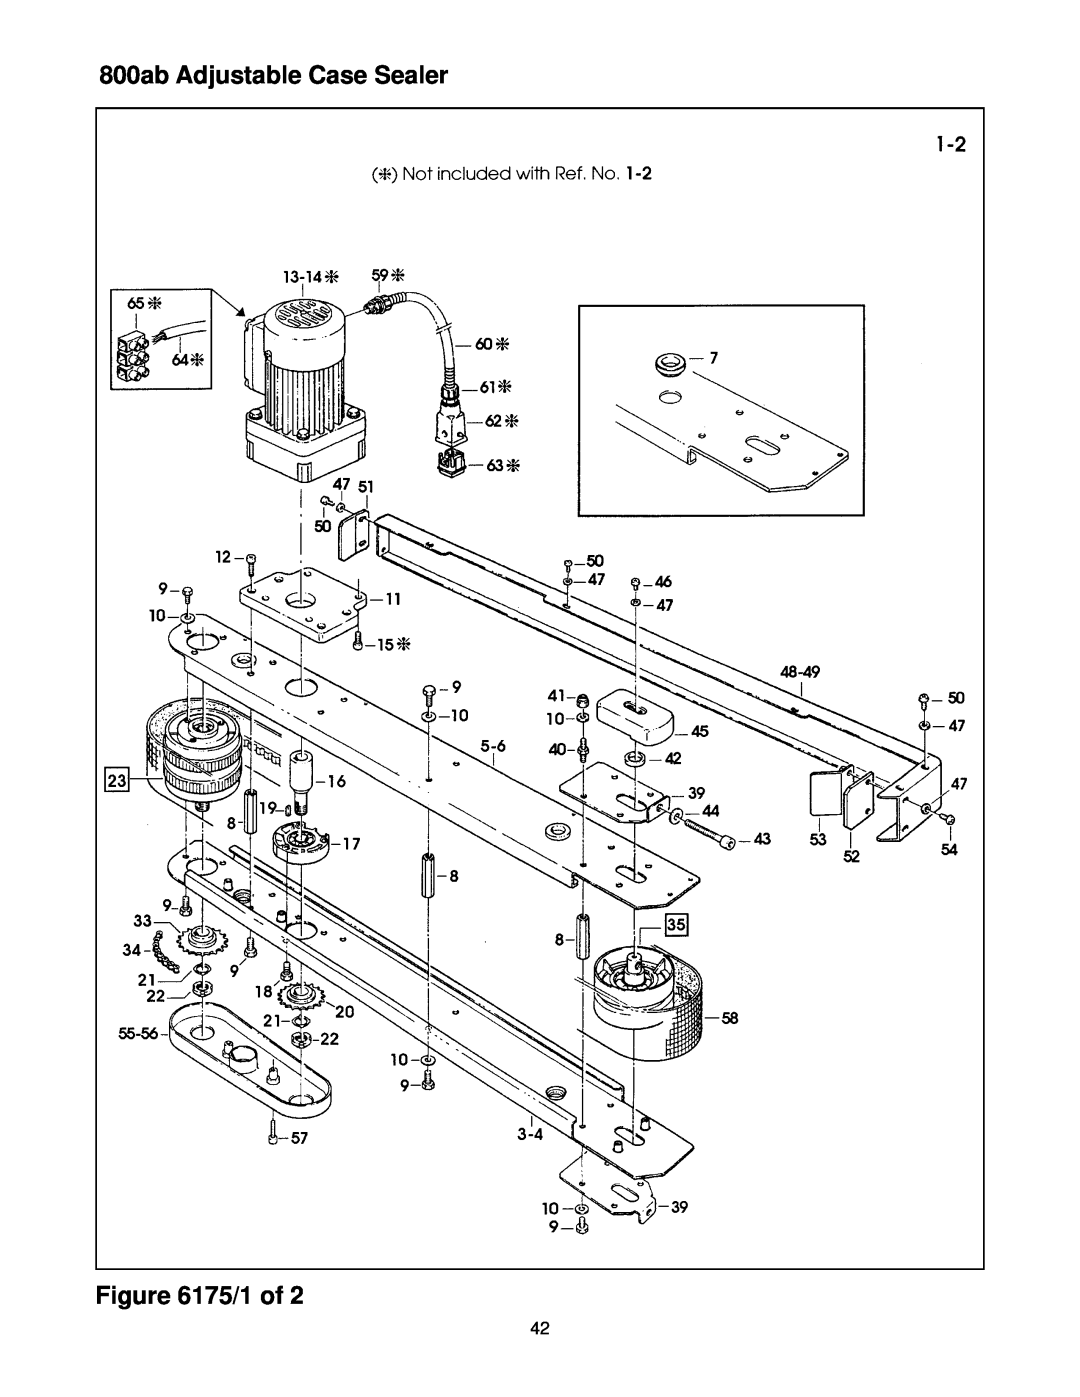 3M 800ab 39600 manual 800ab Adjustable Case Sealer /1 of 